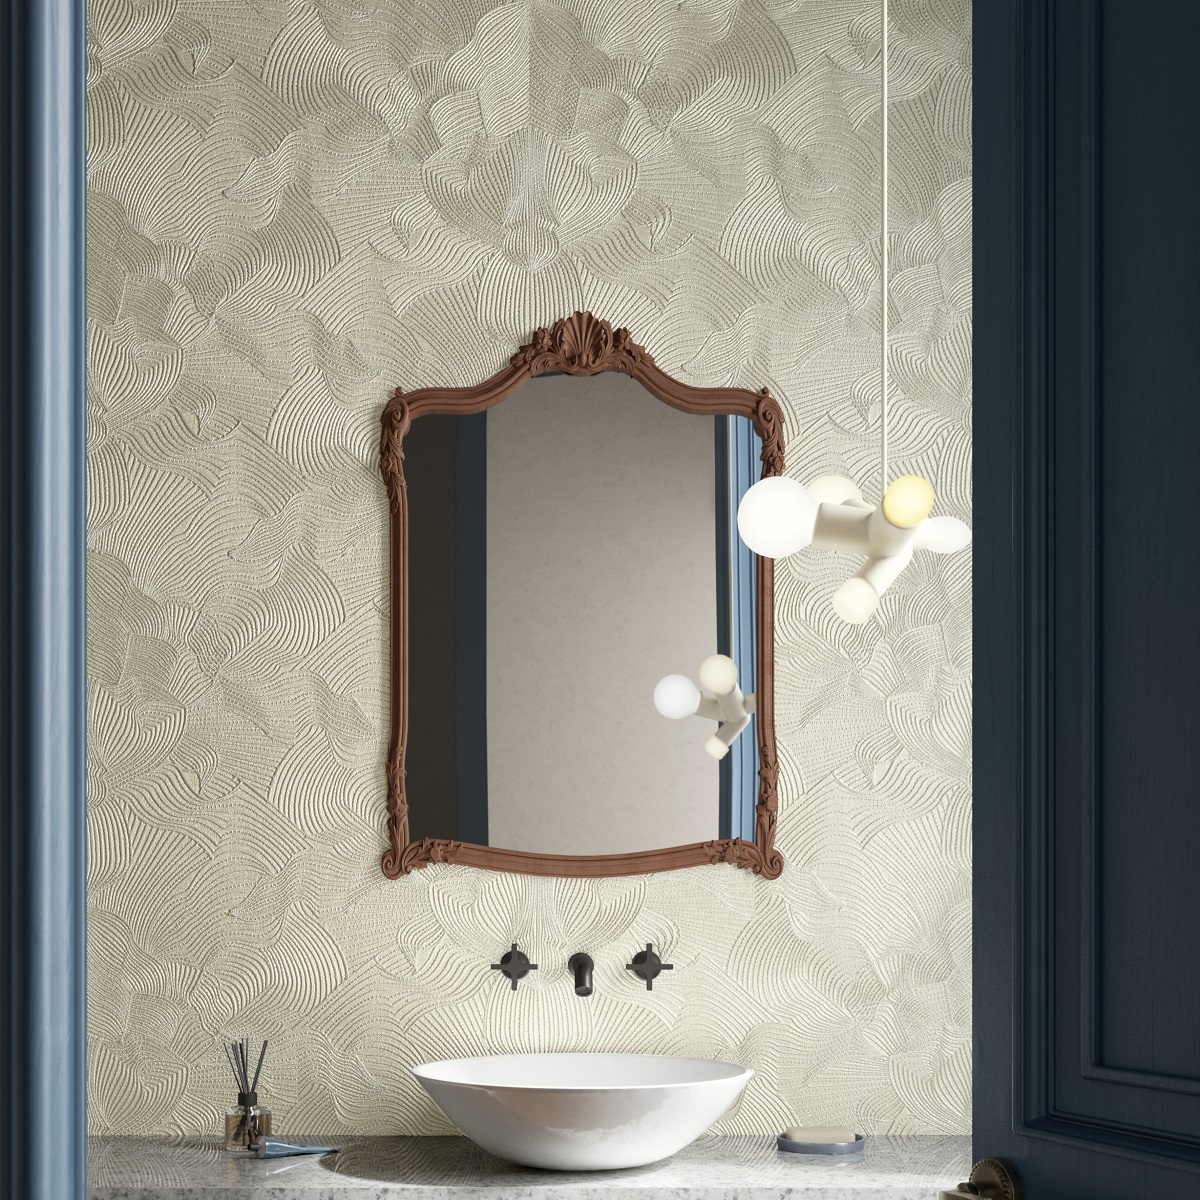 swirled wallpaper pattern behind vanity and mirror